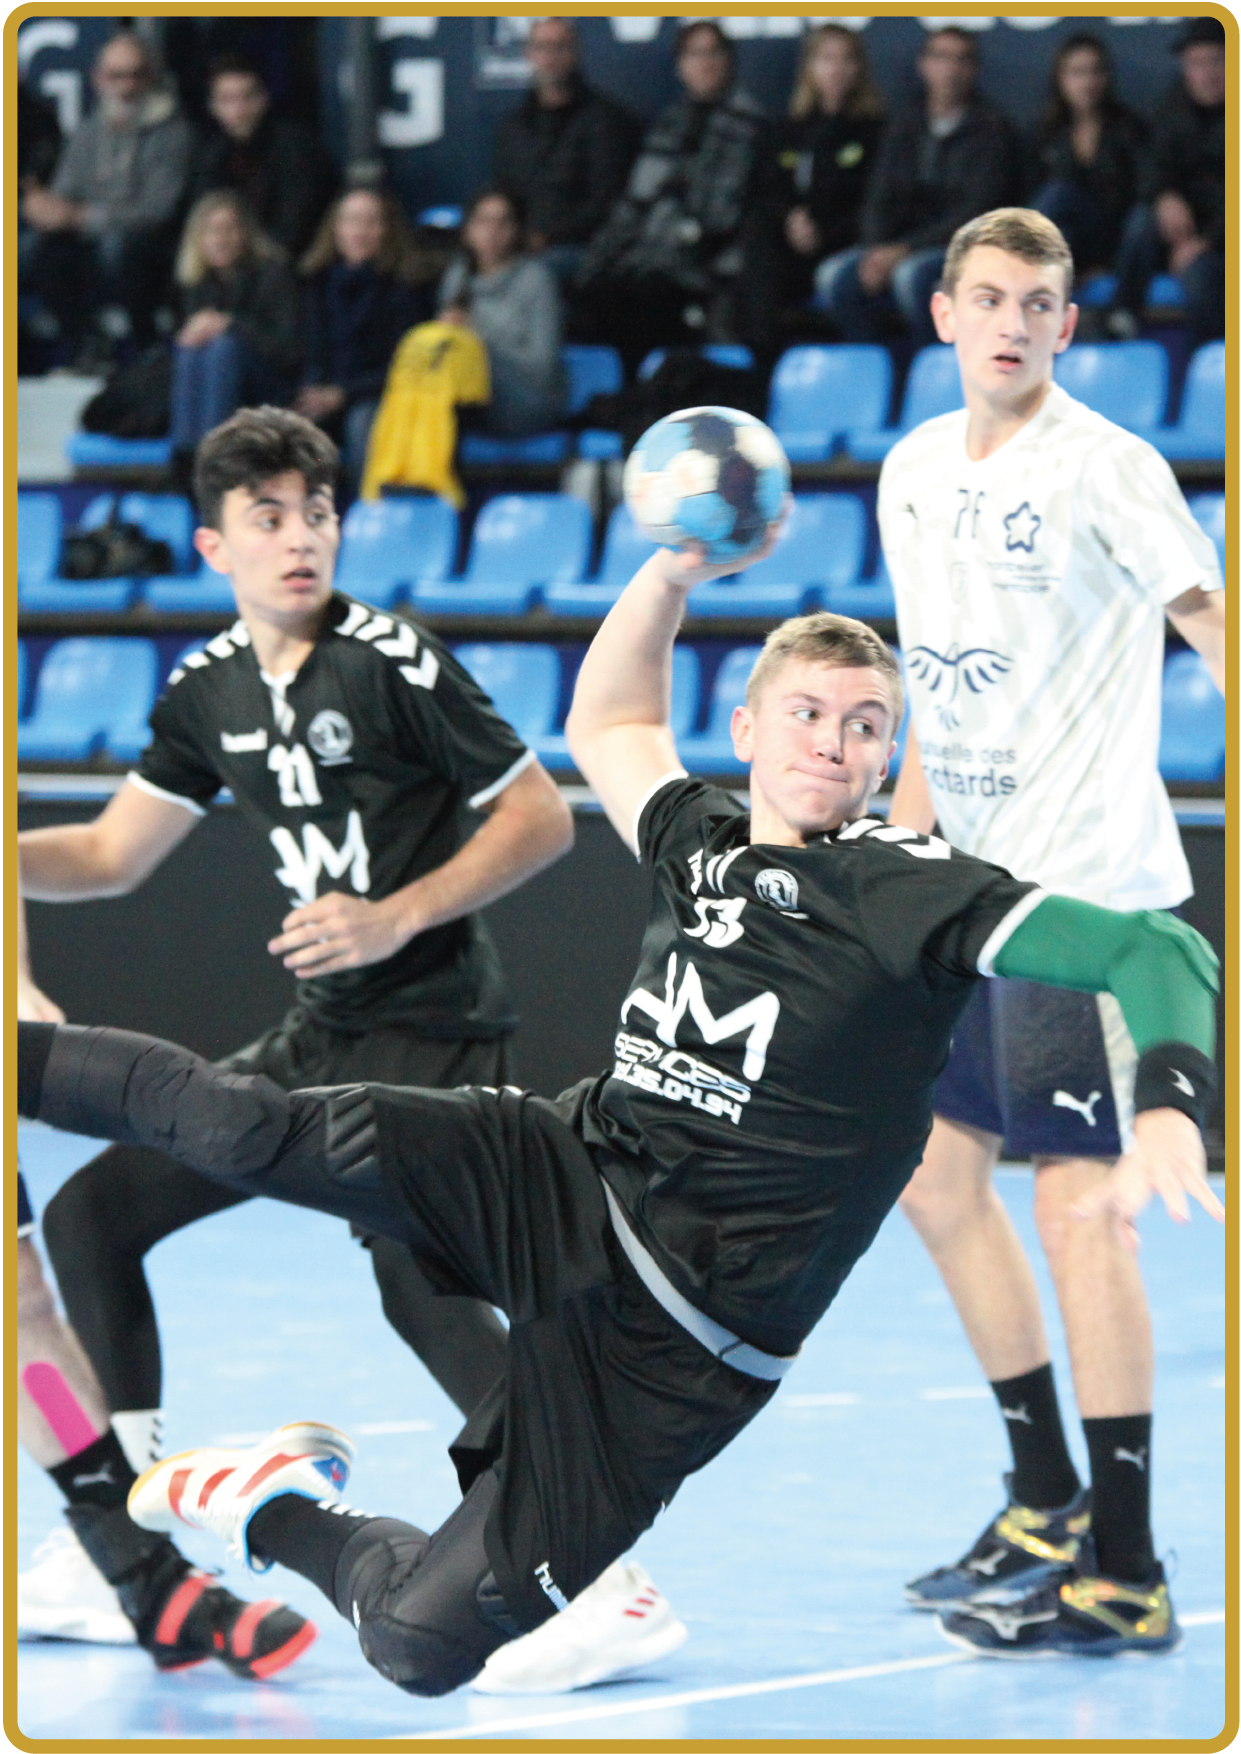 Joueurs de Handball au tournoi international de Agde en Avril 2022